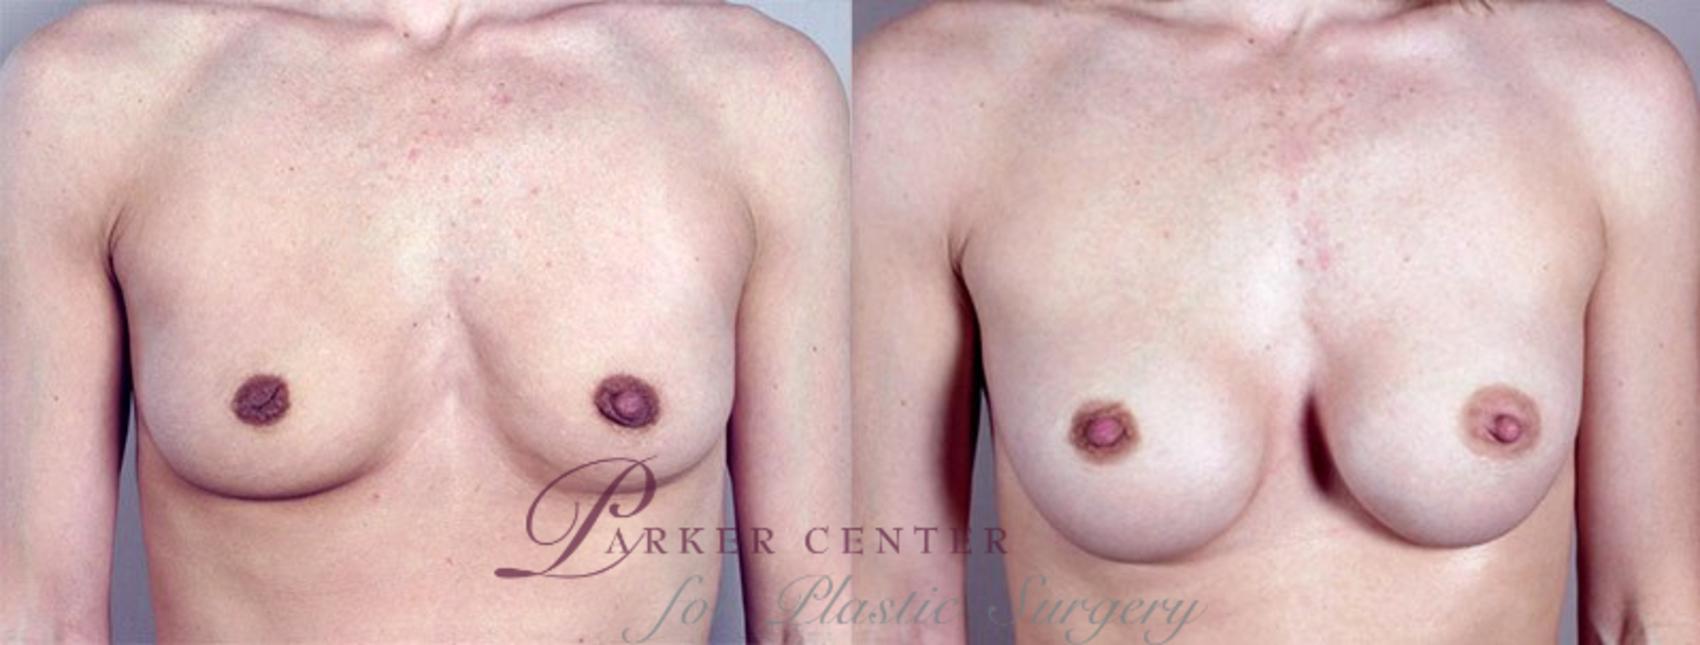 Nipple Procedures Case 368 Before & After View #1 | Paramus, NJ | Parker Center for Plastic Surgery